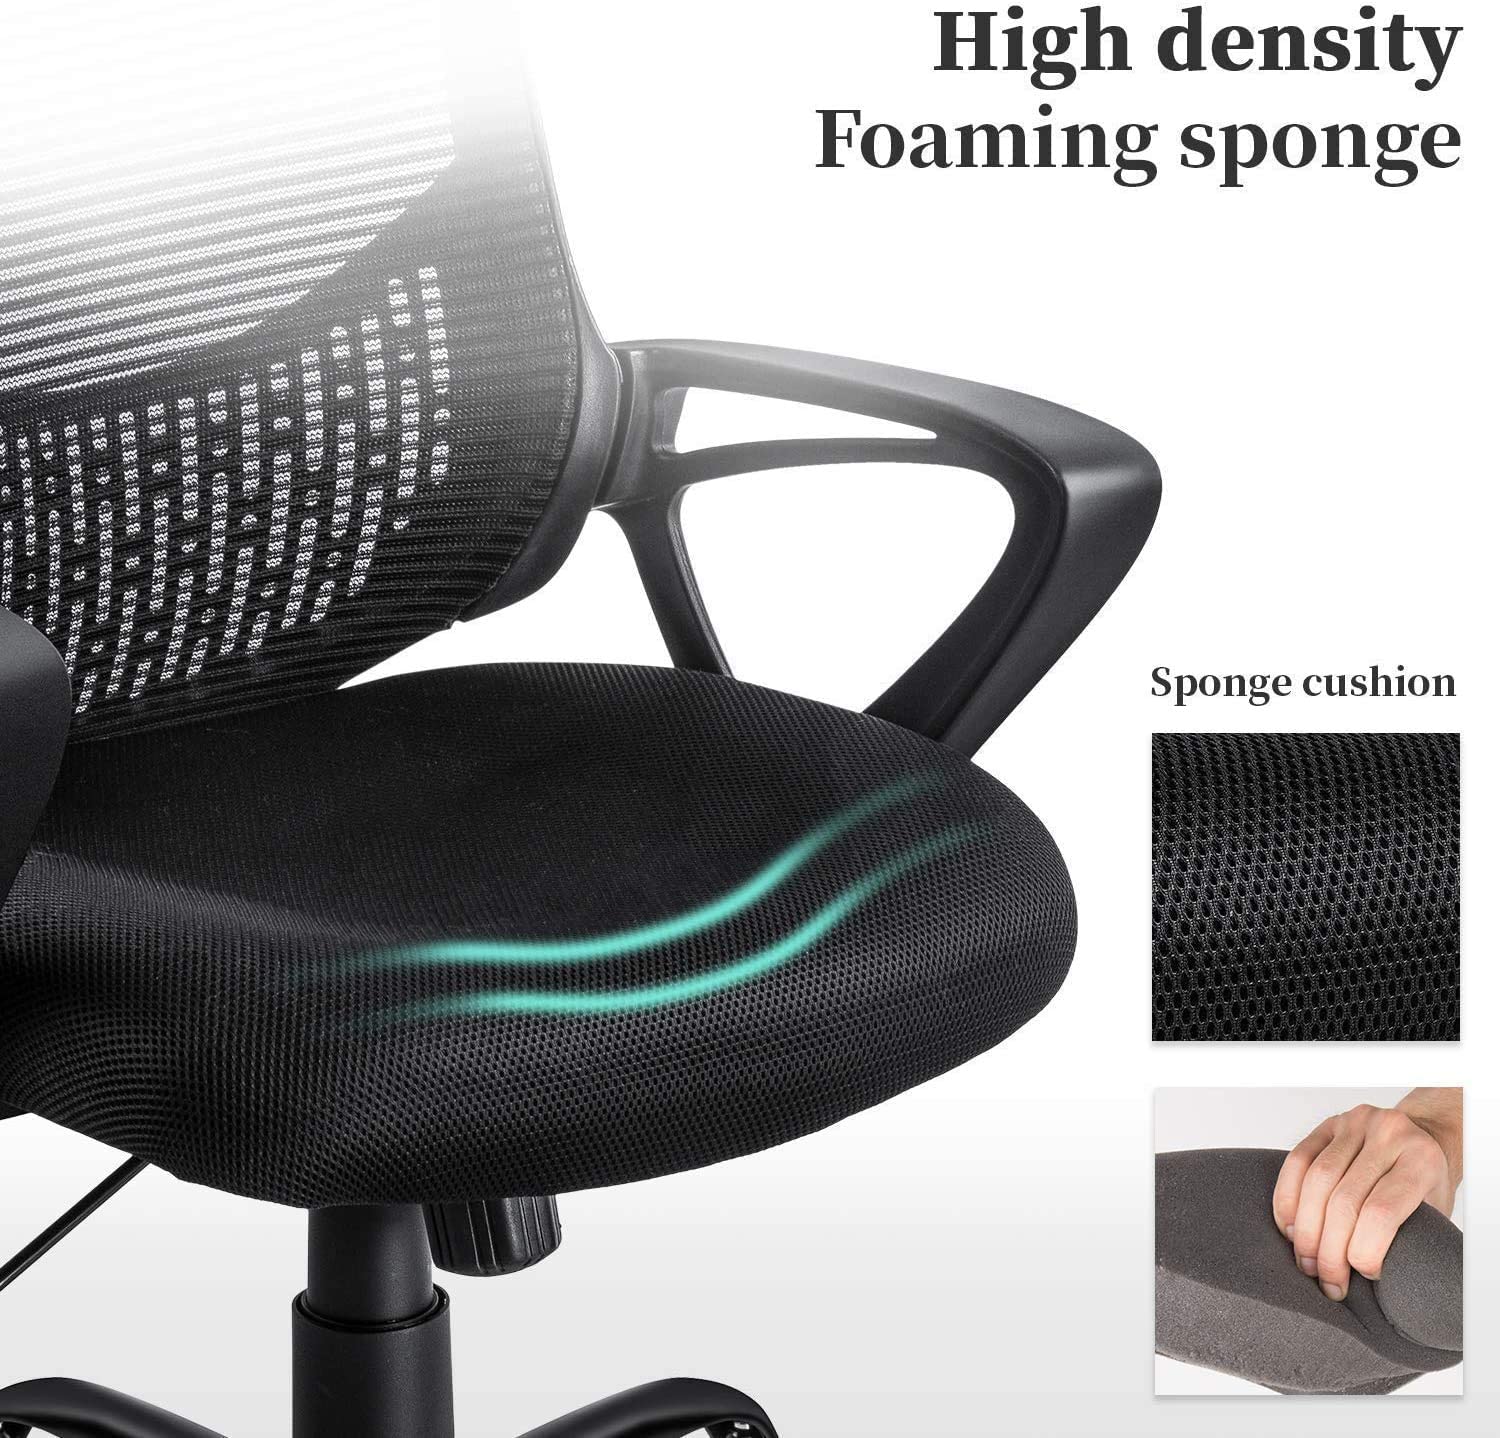 Classic Office Chair - Lifestyle Bravo